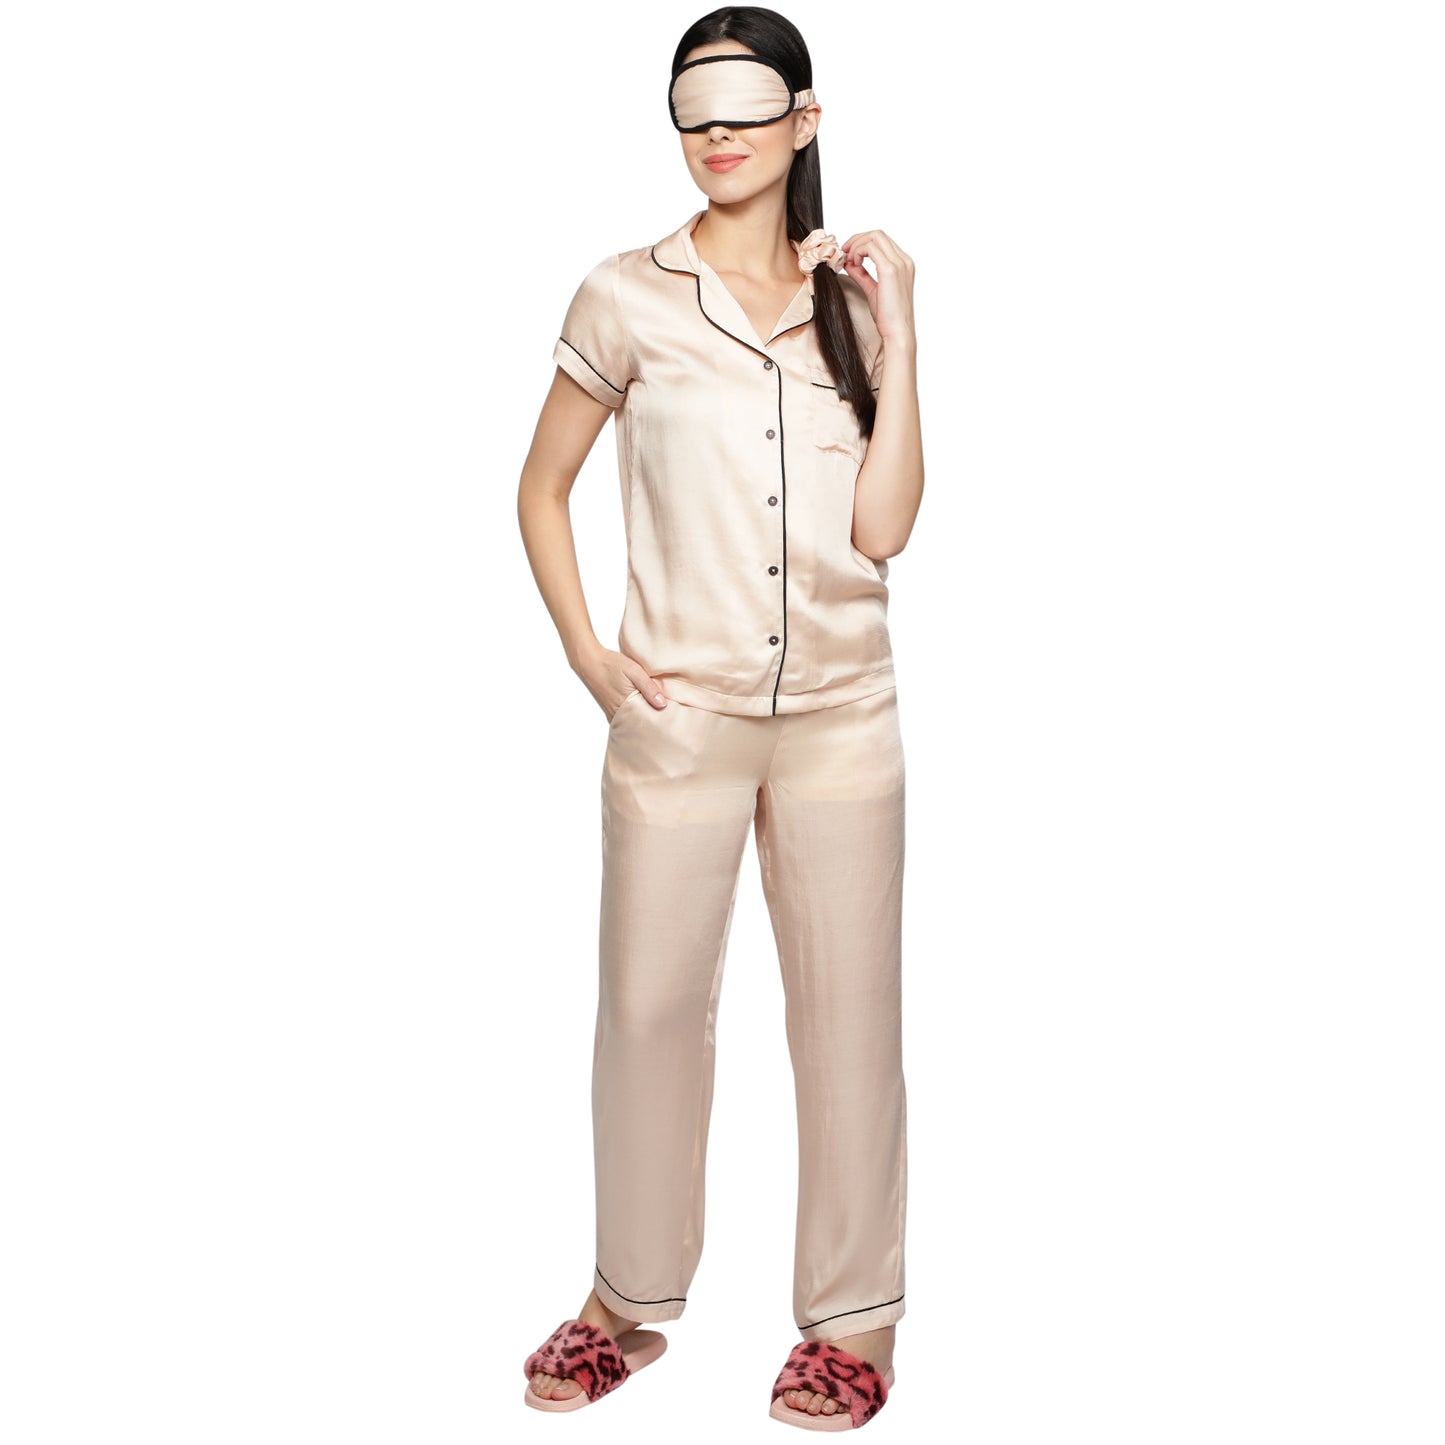 SLAY. Women's Nude color Half Sleeve Button Up Shirt and Pyjama Coord Set with matching Eye mask & Ruffle-clothing-to-slay.myshopify.com-Nightwear Dress